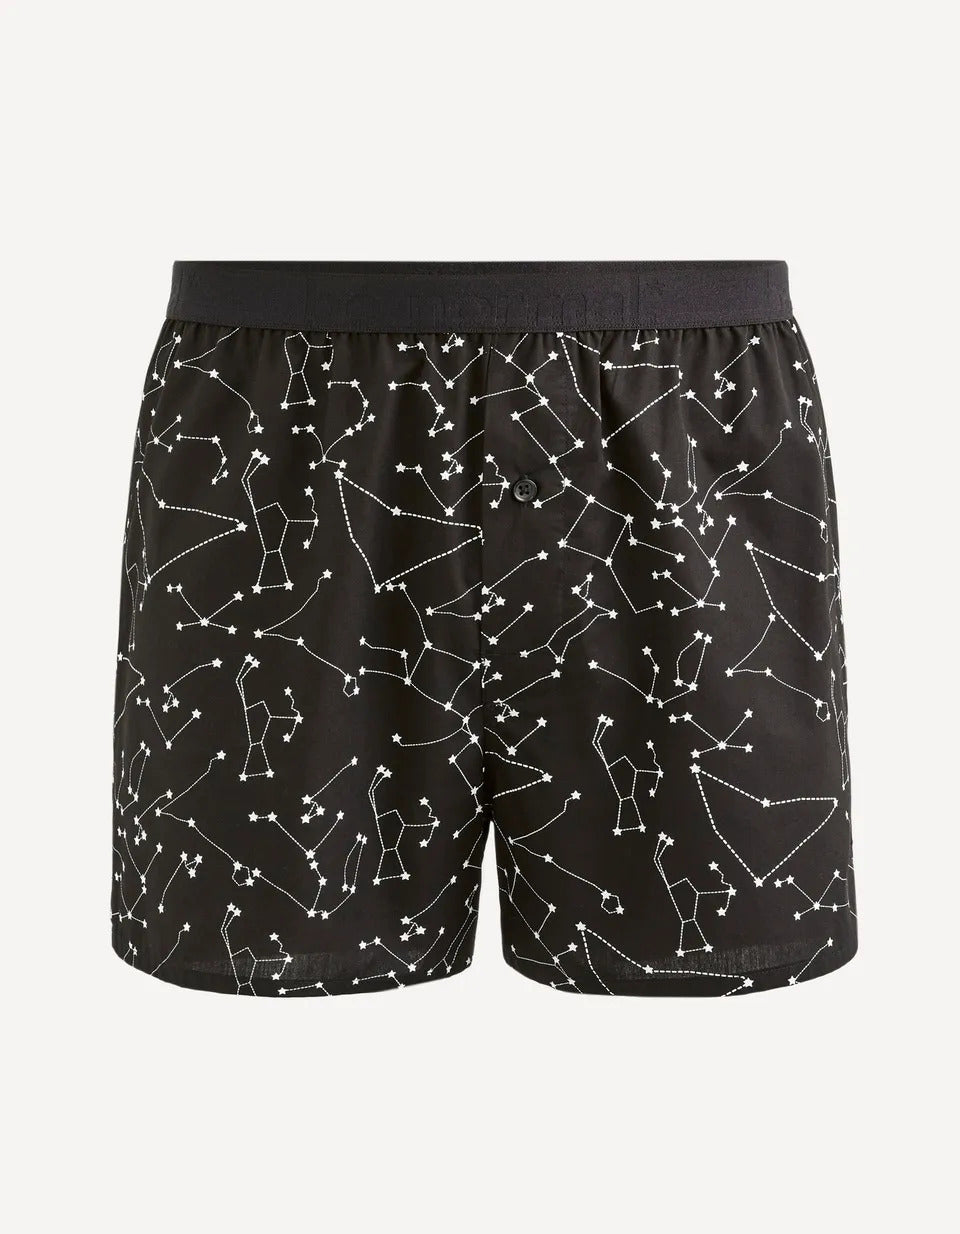 Constellation 100% Cotton Poplin Boxer Shorts - Black - 01